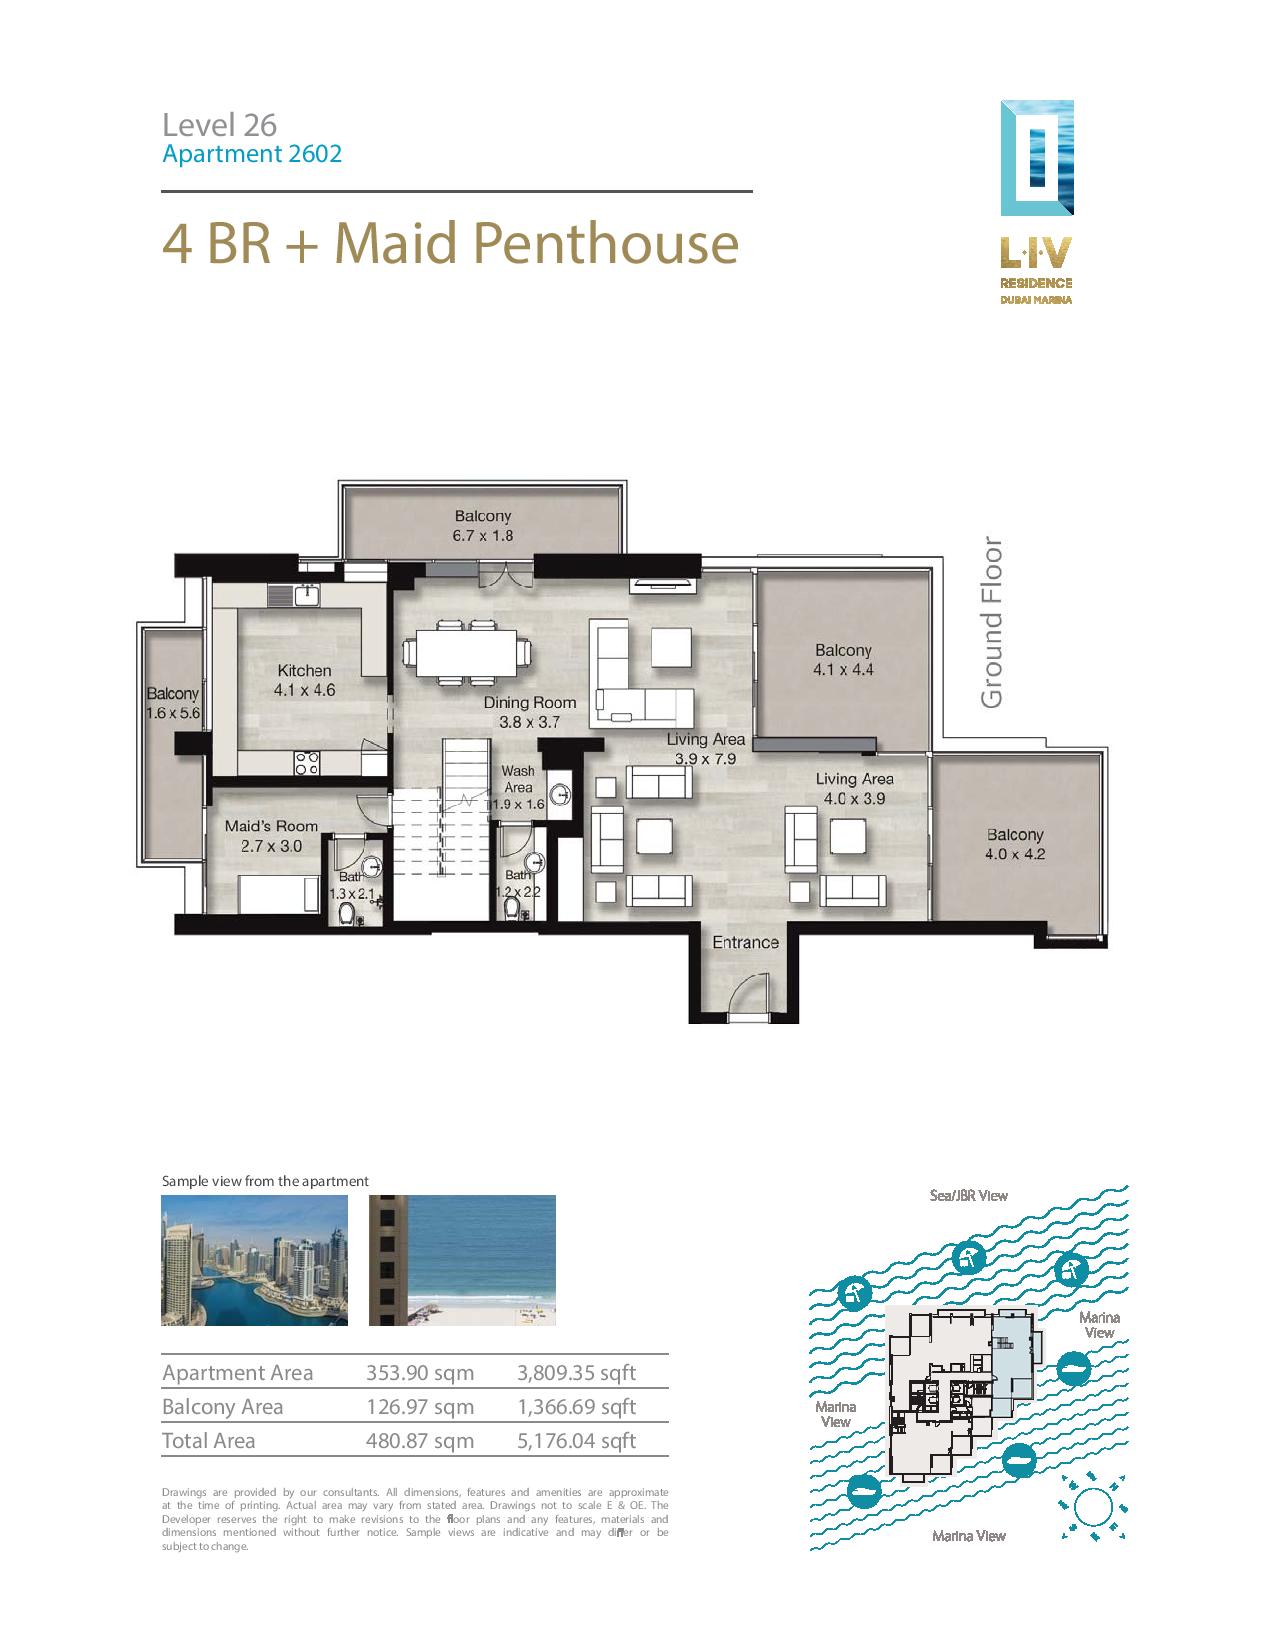 Floor Plans - LIV Residence Dubai Marina by LIV Real Estate Development